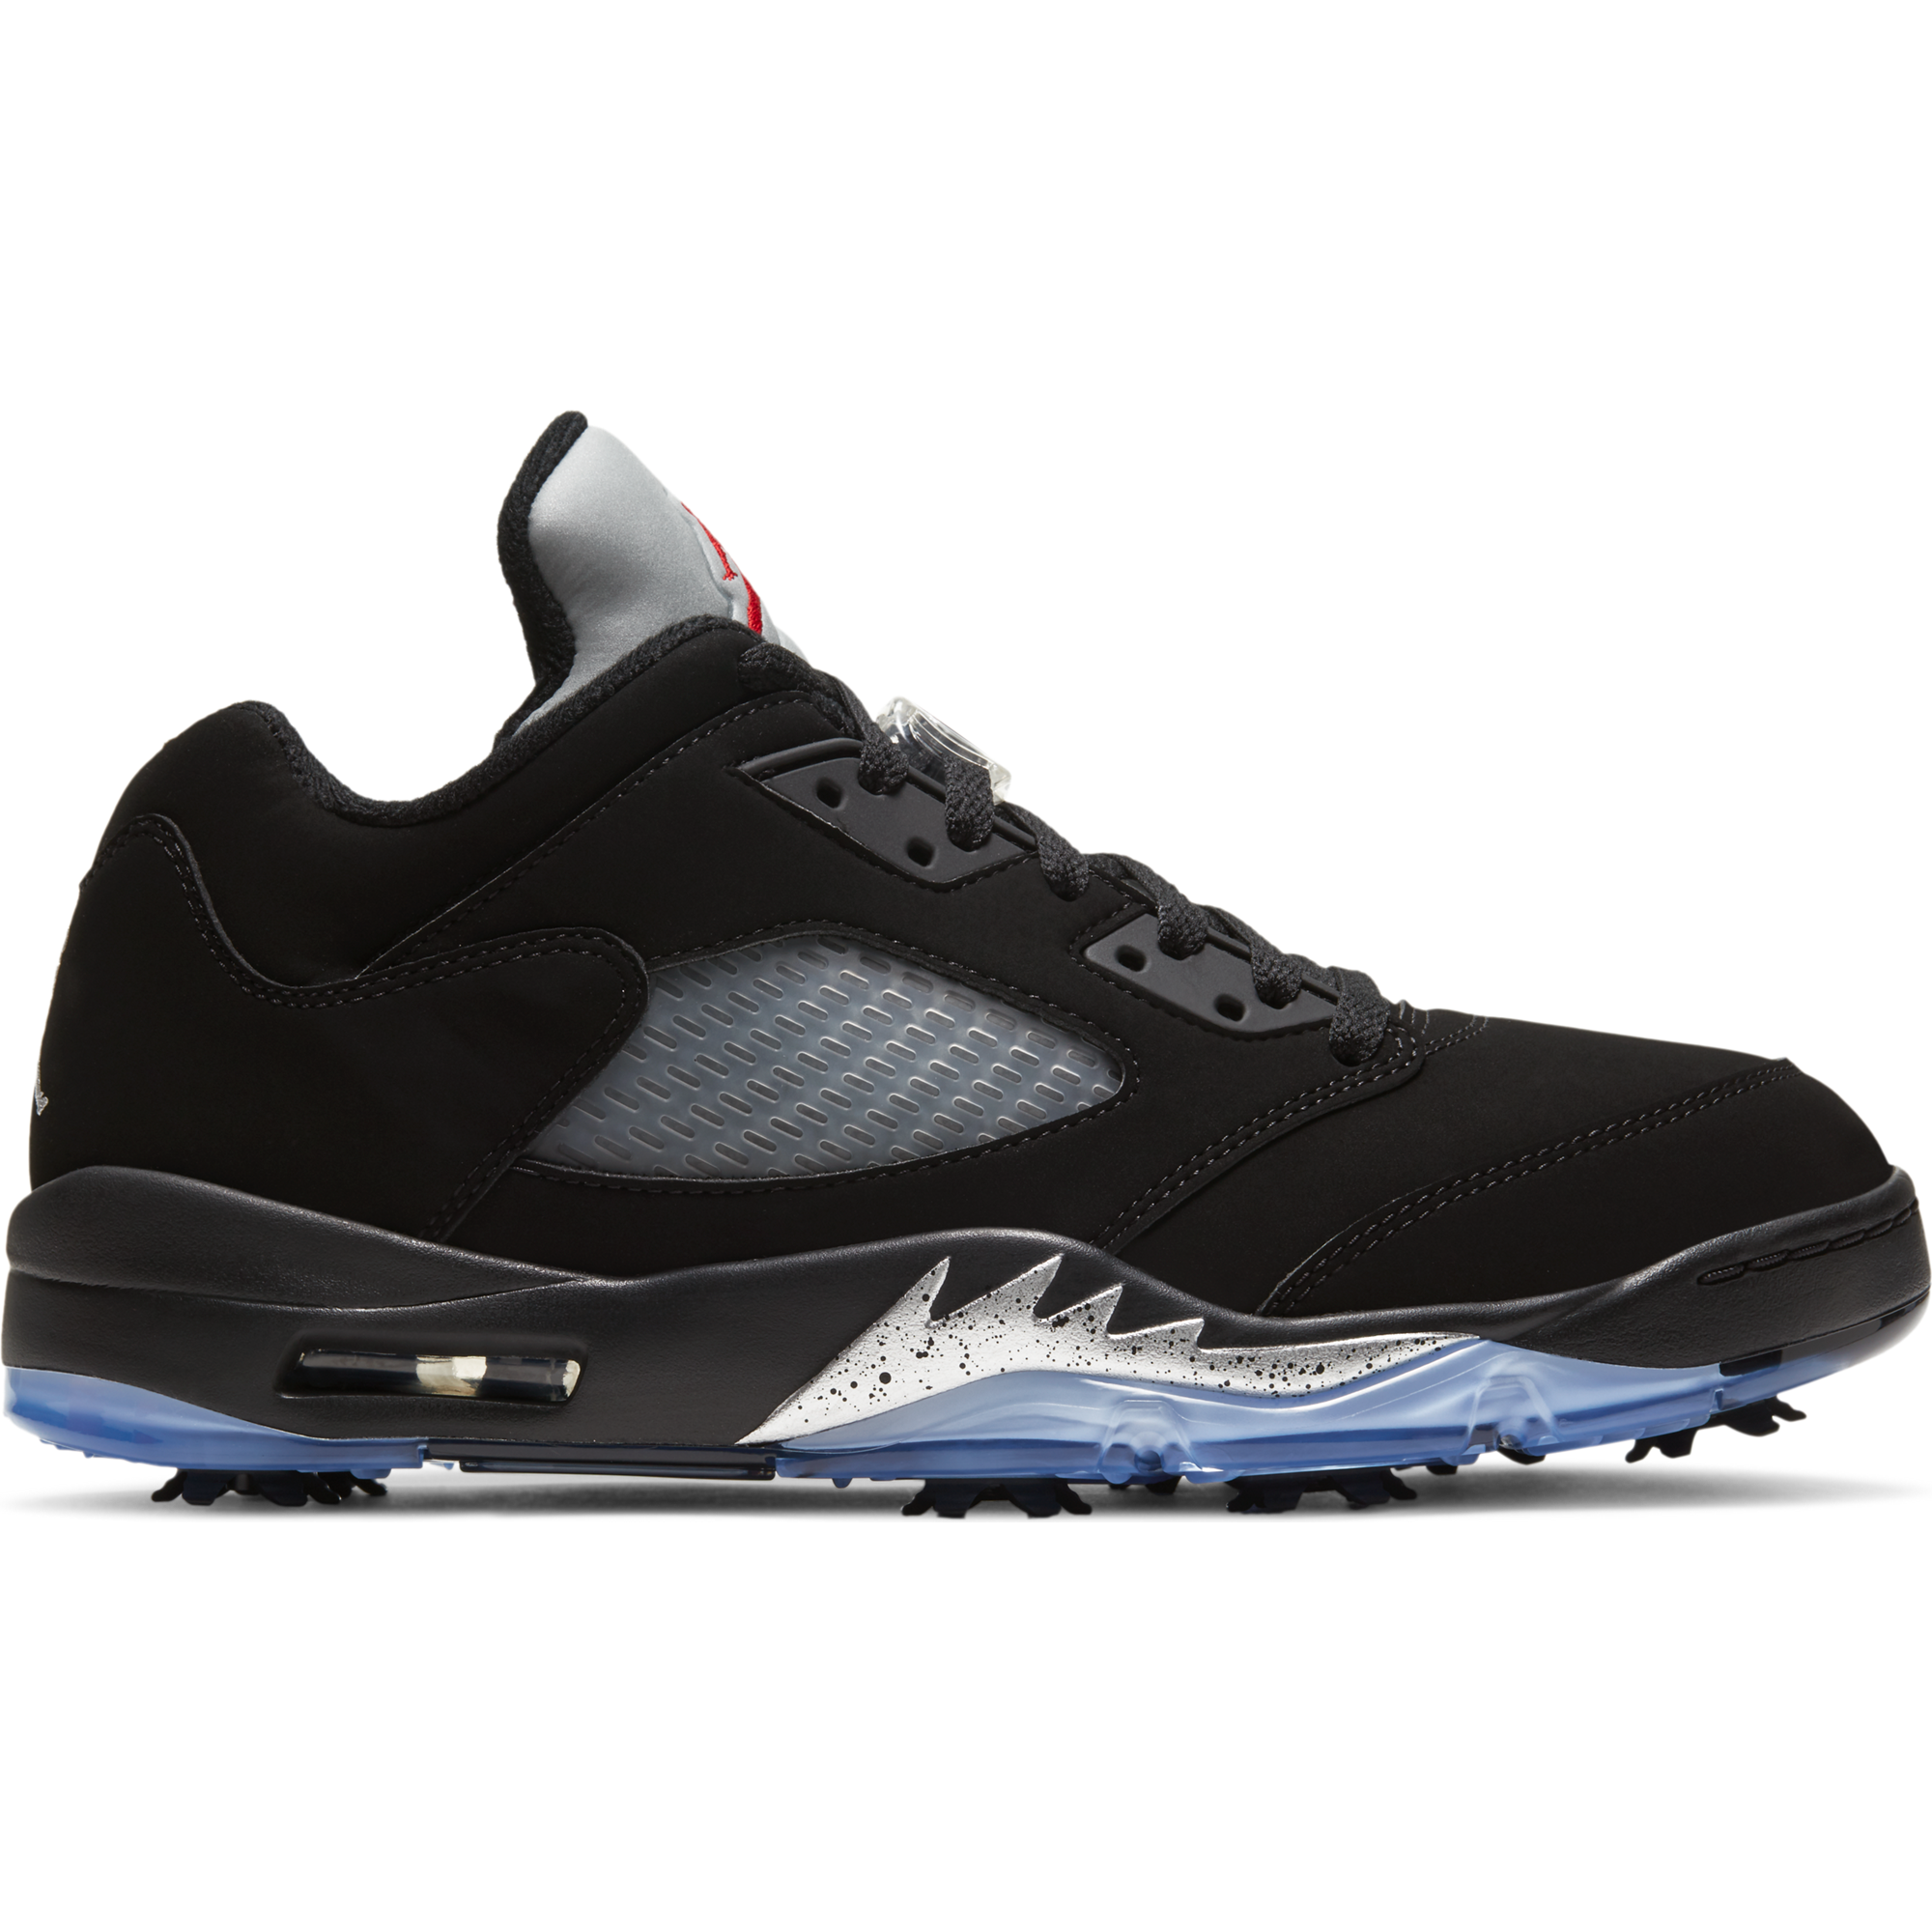 Air Jordan V Low Spiked Golf Shoe - Black/Metallic